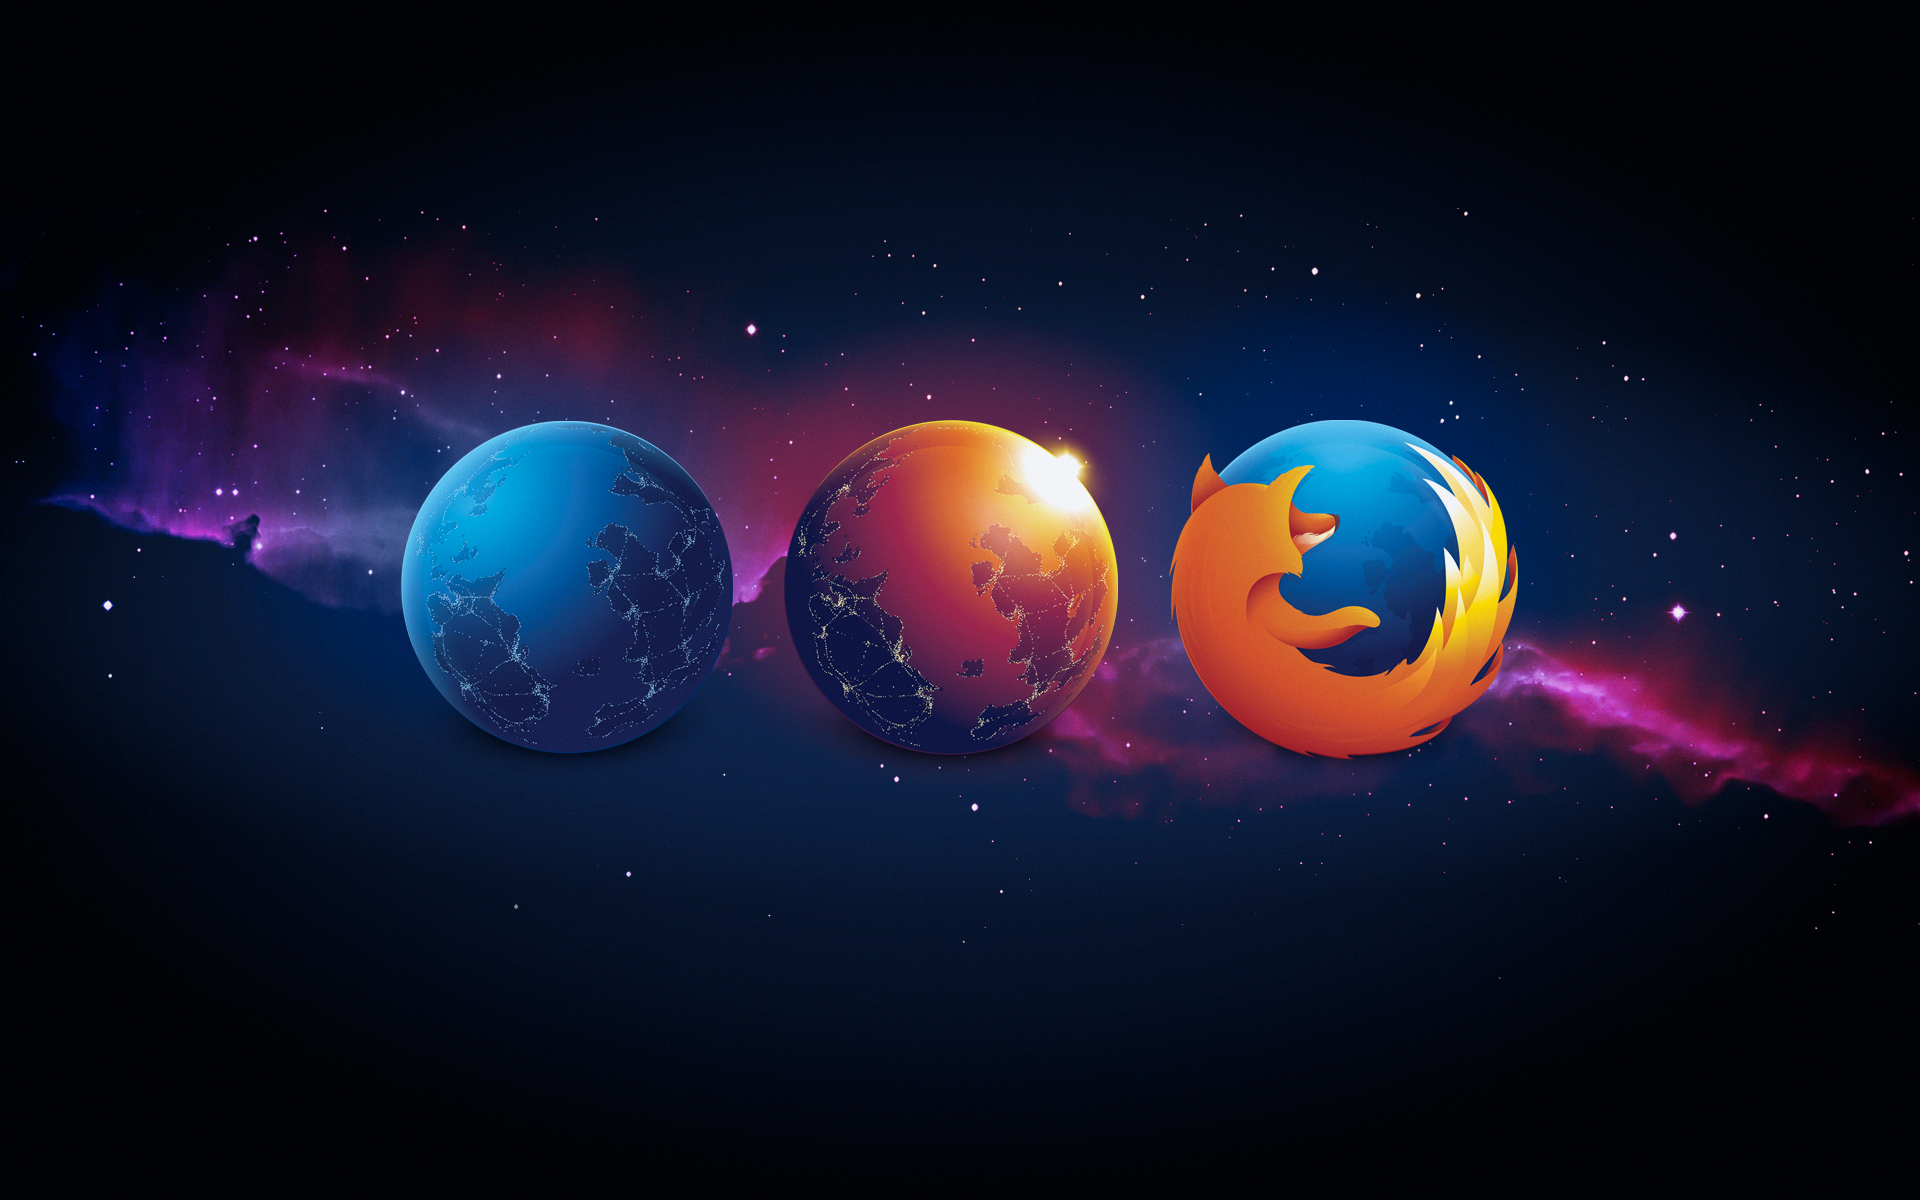 Firefox Nightly, Aurora and the new logo